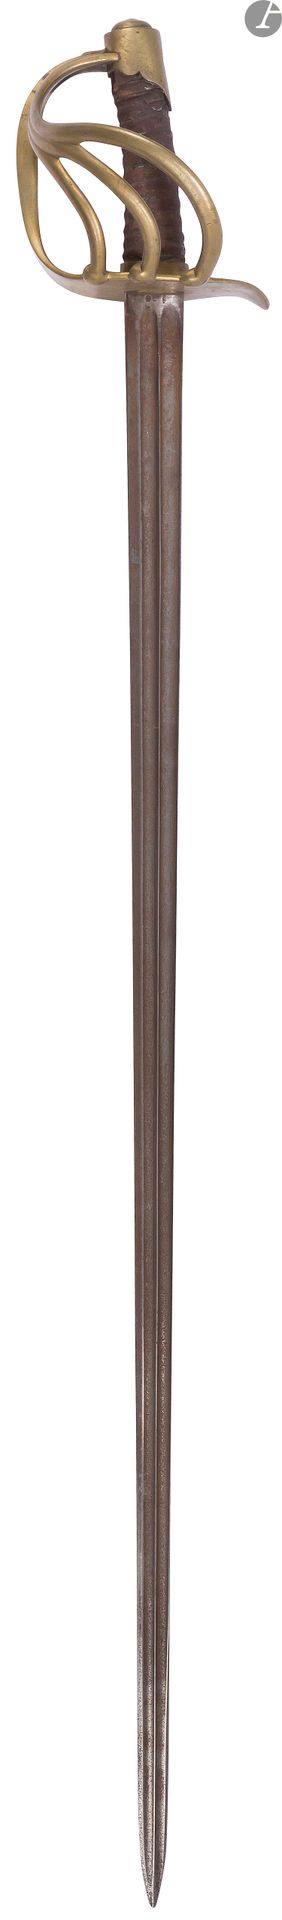 Null 骑兵剑的线上模型安十一修改1816年。
皮革包覆的手柄（水印丢失）。黄铜框架，有印记，四角防护，其中三个是螺栓连接。直刀，双侧中空，刀尖带回中心。
E&hellip;